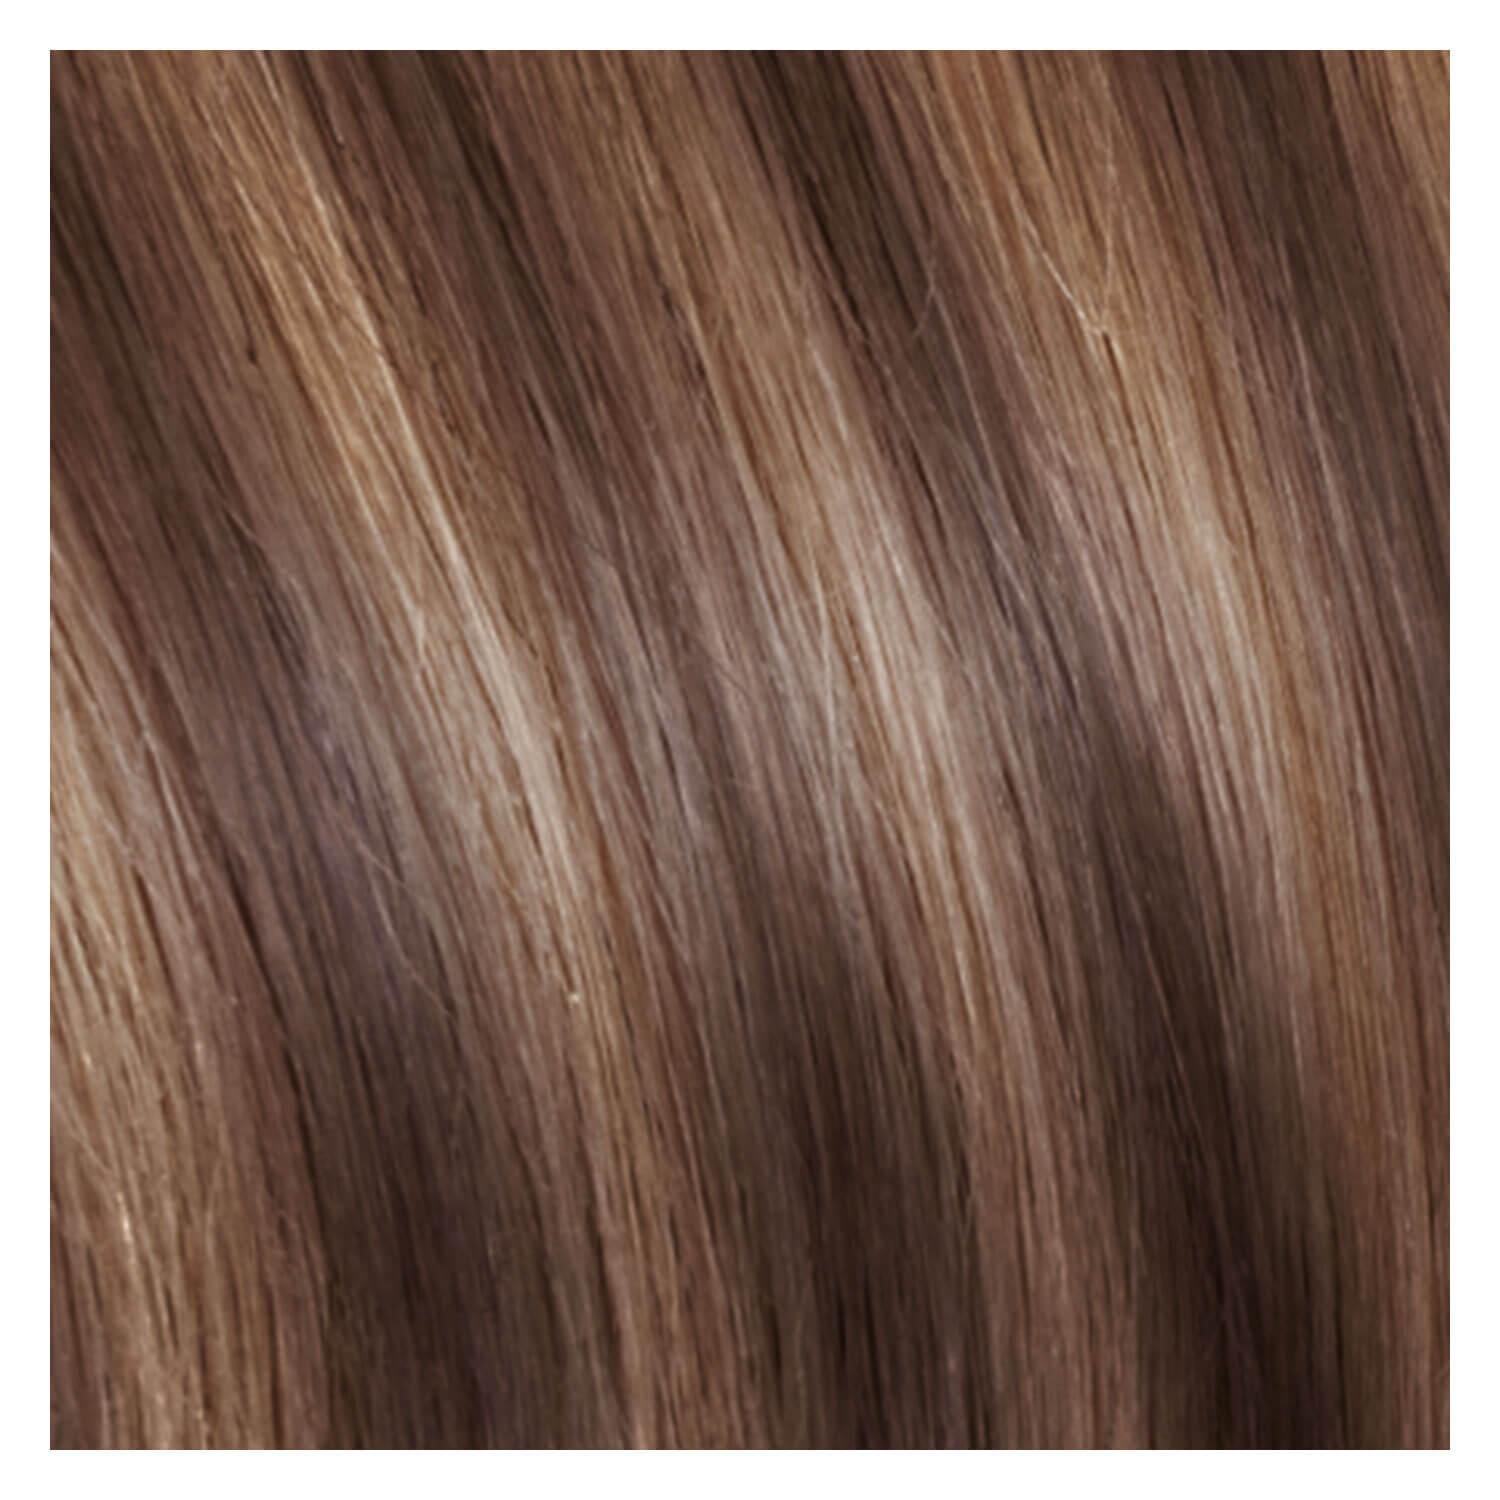 SHE Bonding-System Hair Extensions Straight - M6/27 Helles Kastanienbraun/Mittleres Goldblond 55/60c